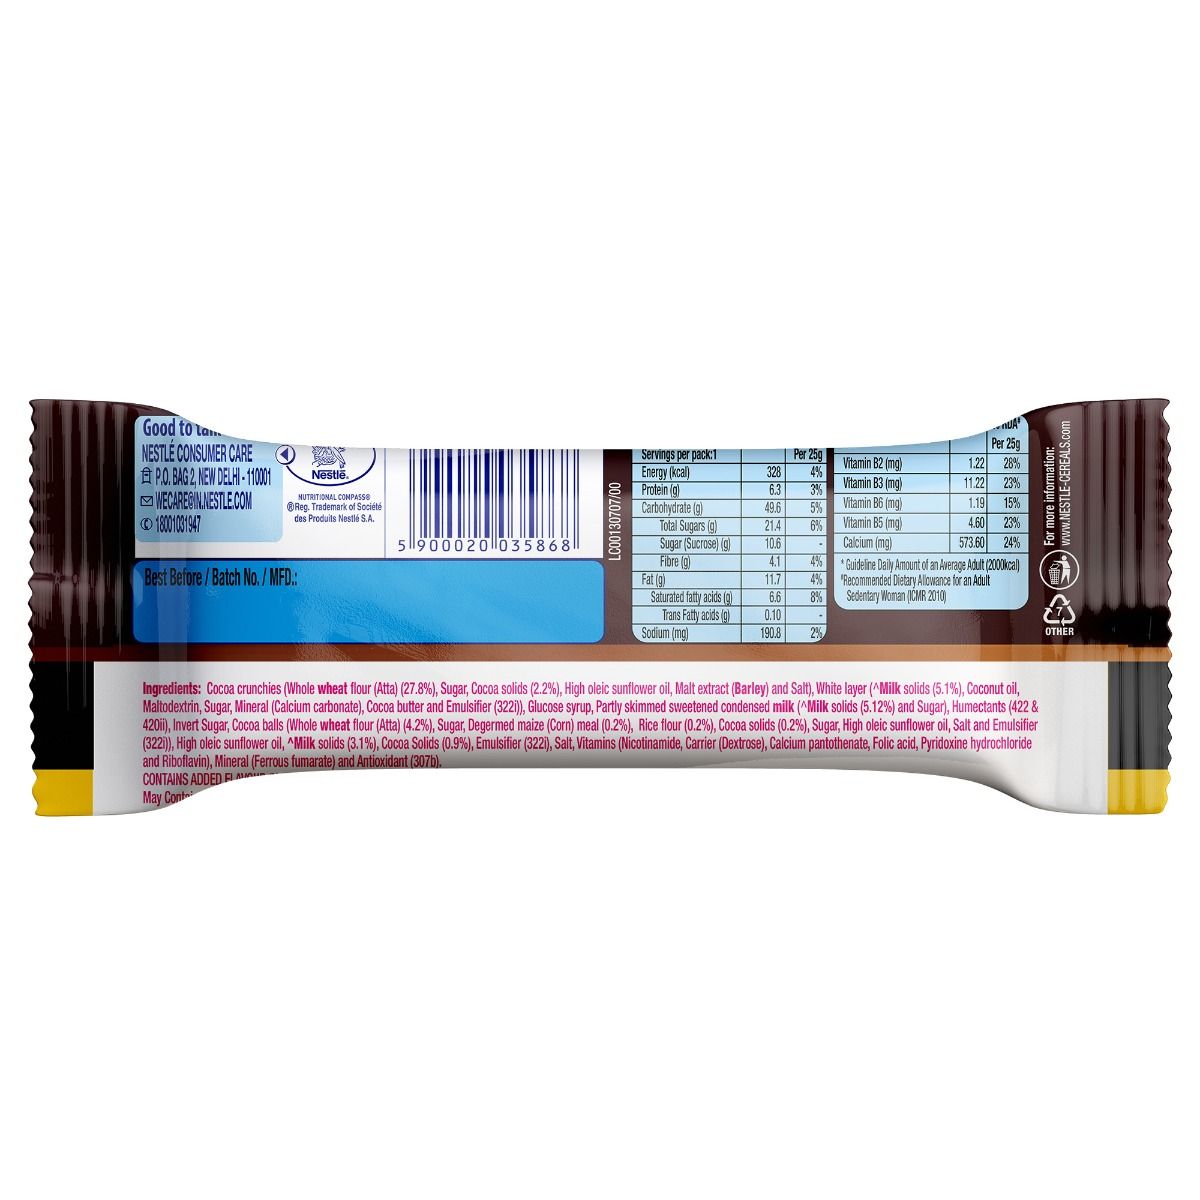 Nestle Koko Crunch Breakfast Cereal Bar, 25 gm, Pack of 1 